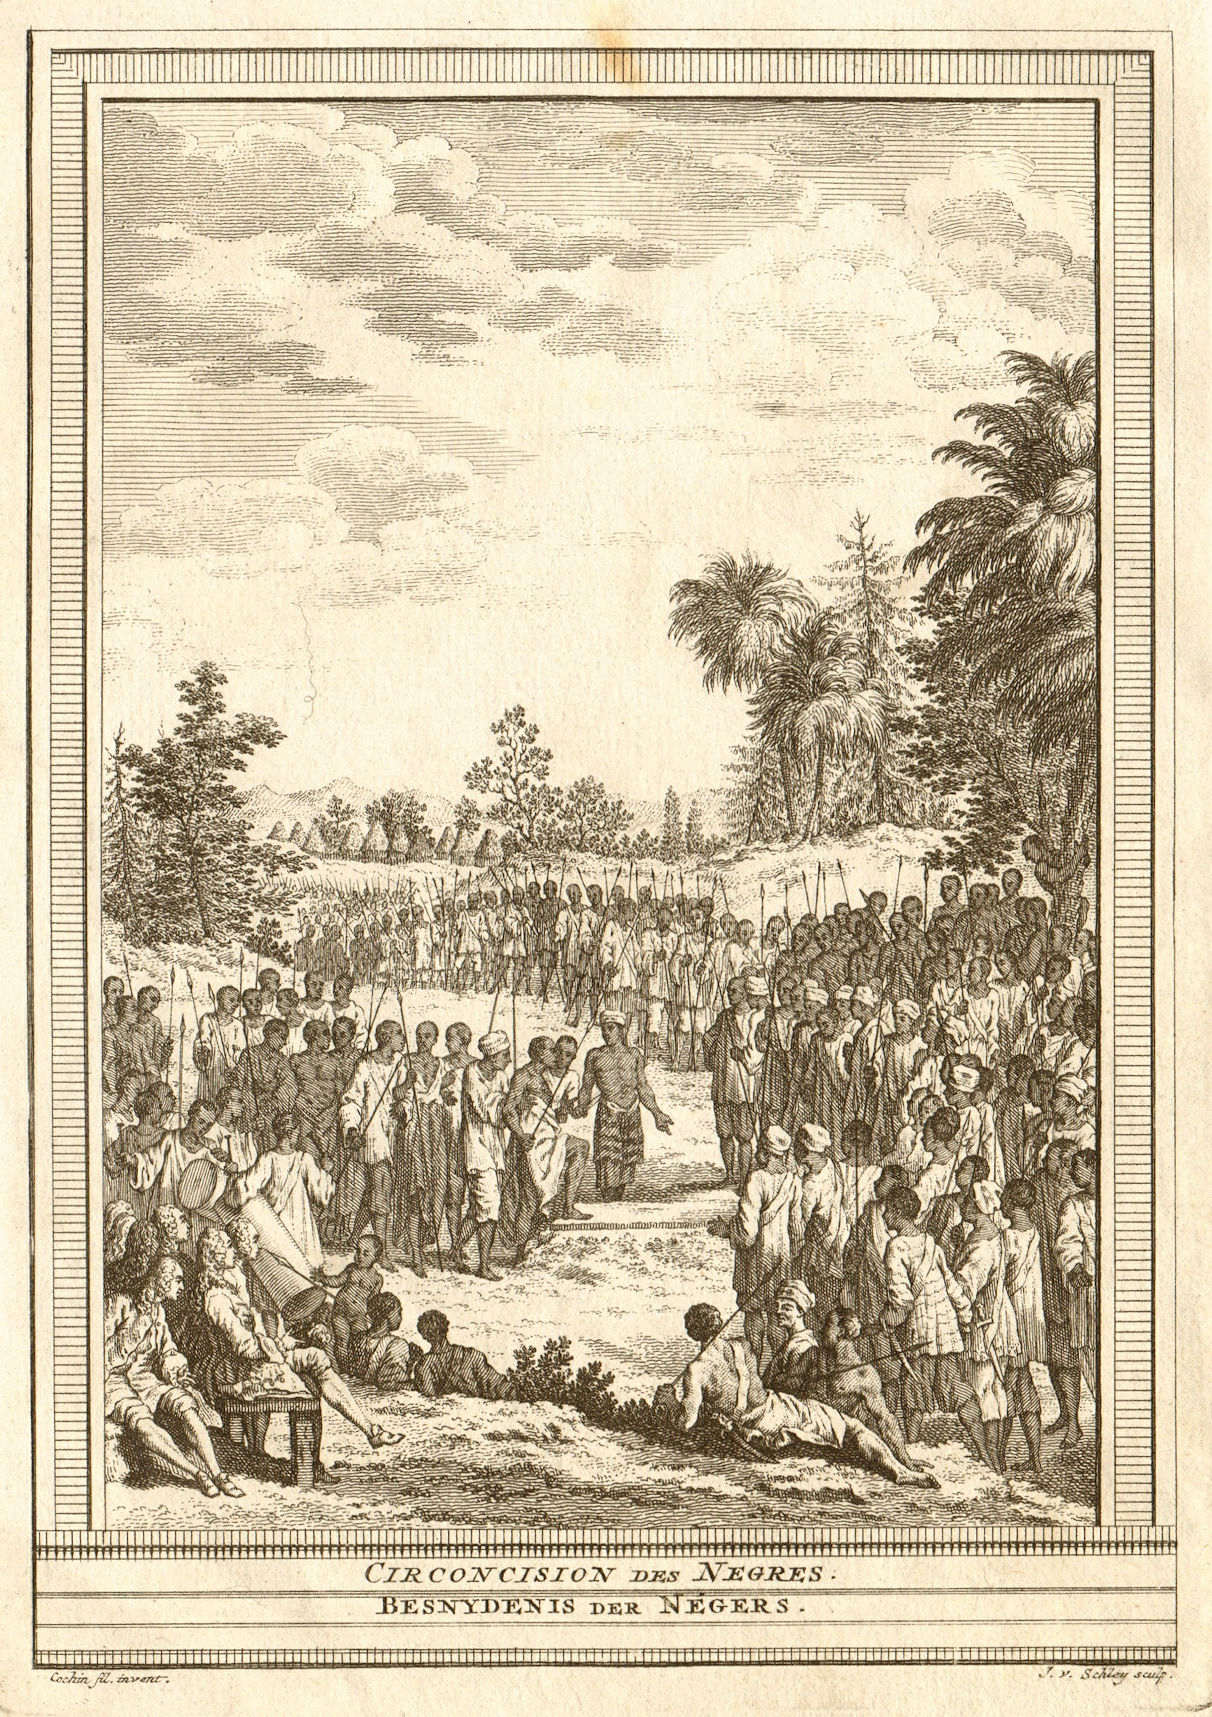 'Circoncision des Négres'. Negro circumcision near St Louis Senegal. SCHLEY 1747